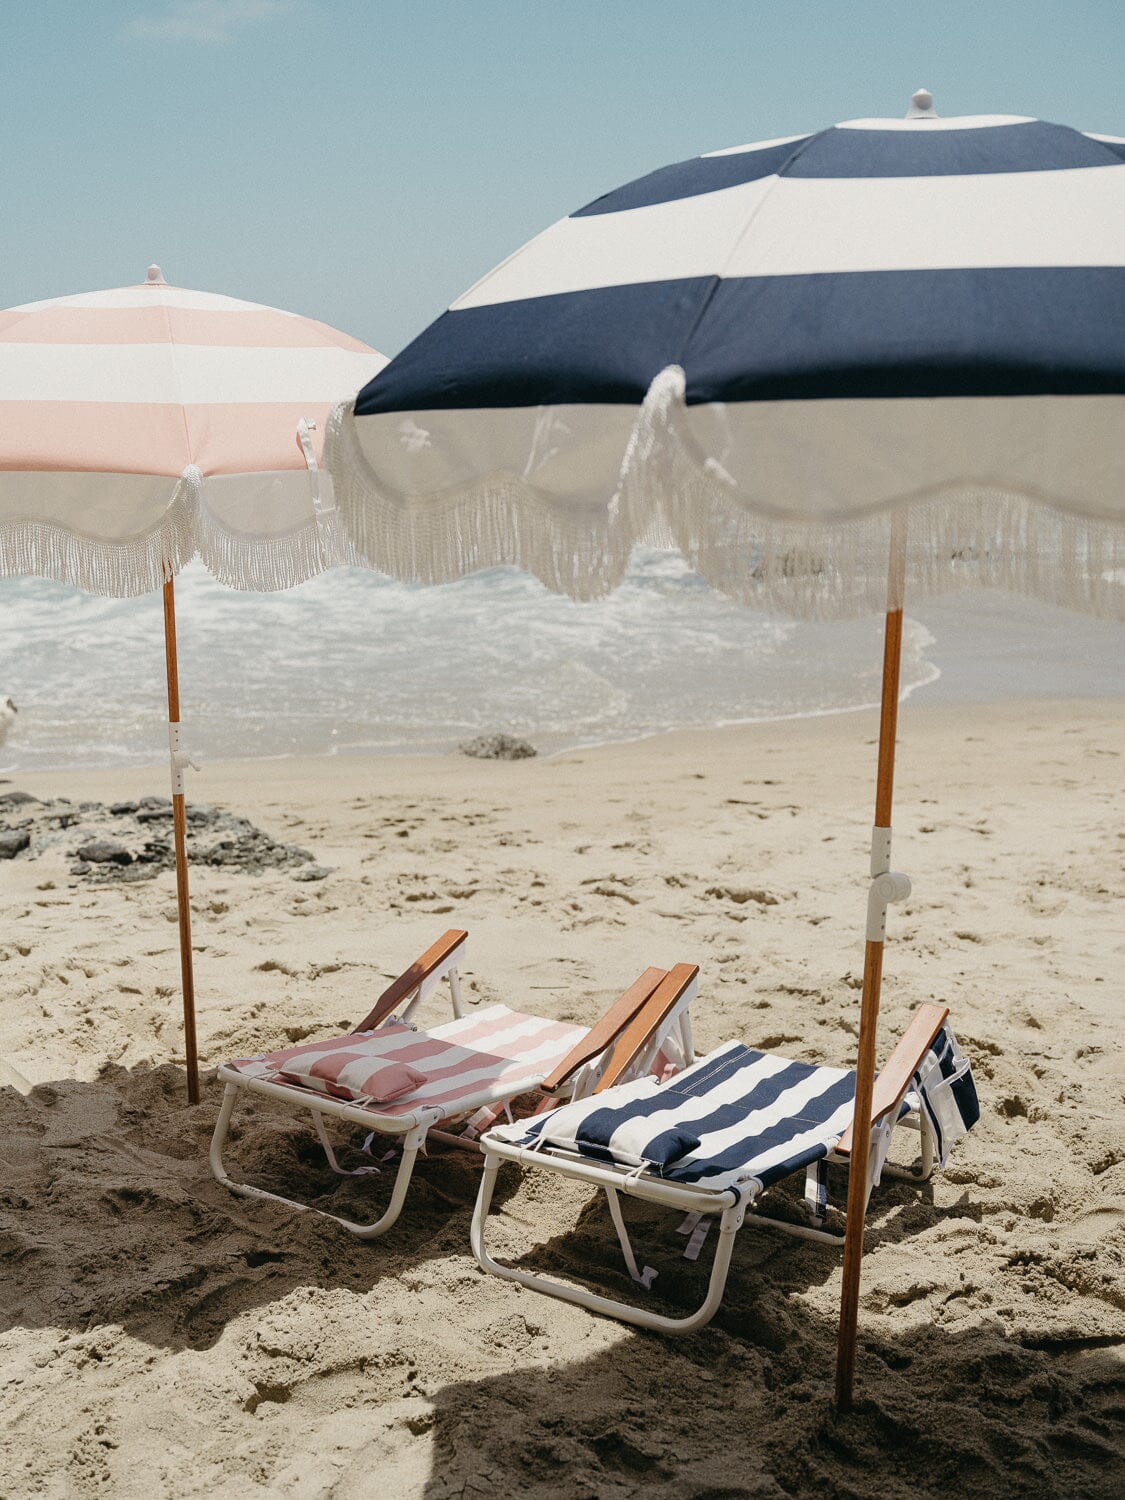 The Holiday Beach Umbrella - Navy Capri Stripe Holiday Umbrella Business & Pleasure Co 